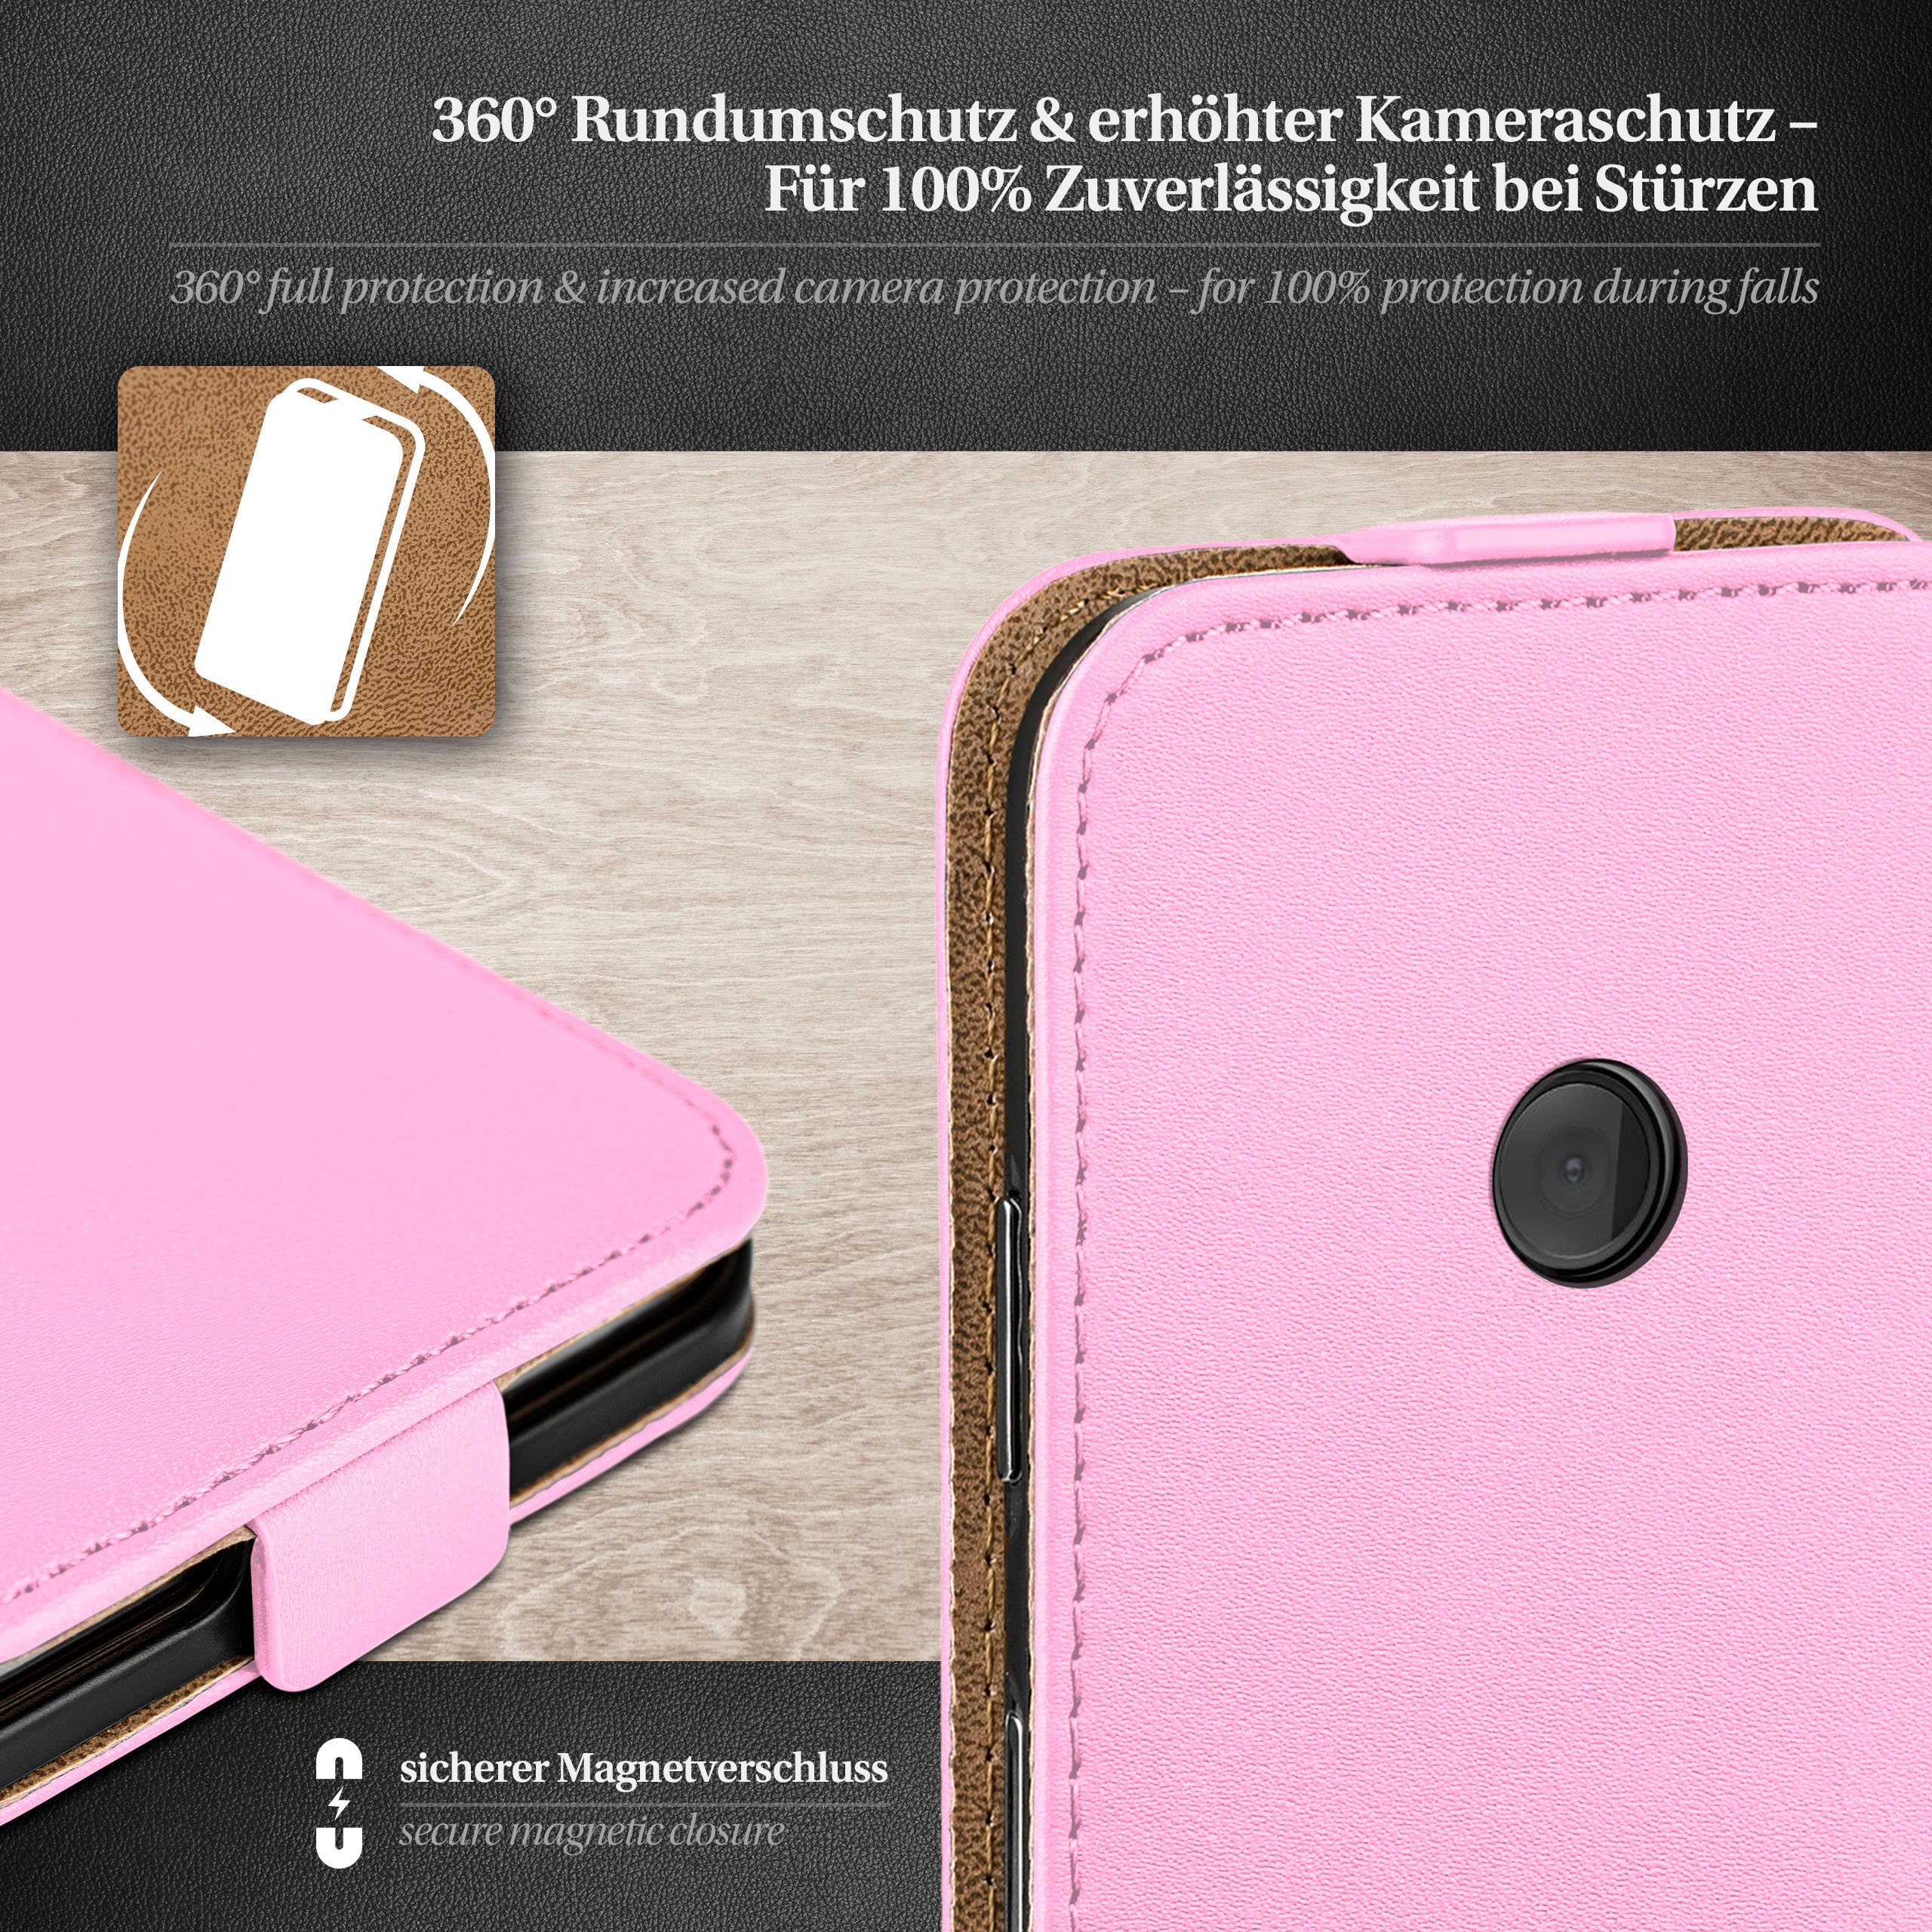 MOEX Flip Flip Lumia Case, 520/525, Icy-Pink Nokia, Cover